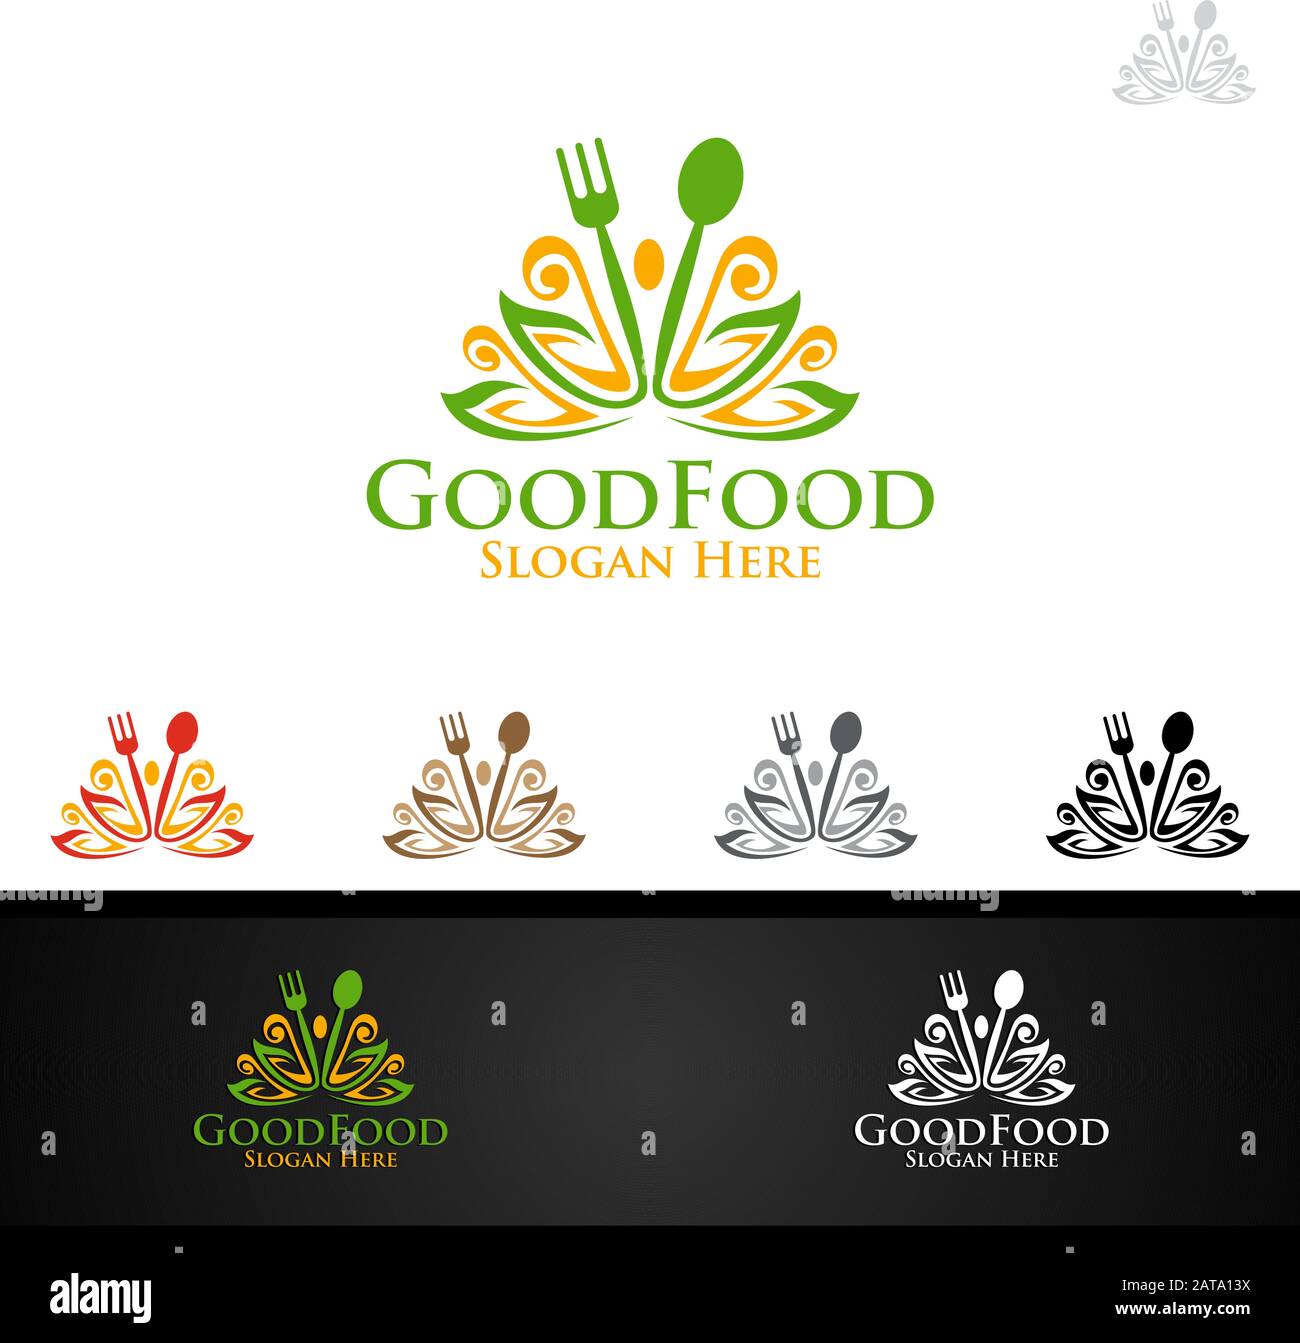 7,540 Finger Food Logo Images, Stock Photos & Vectors | Shutterstock